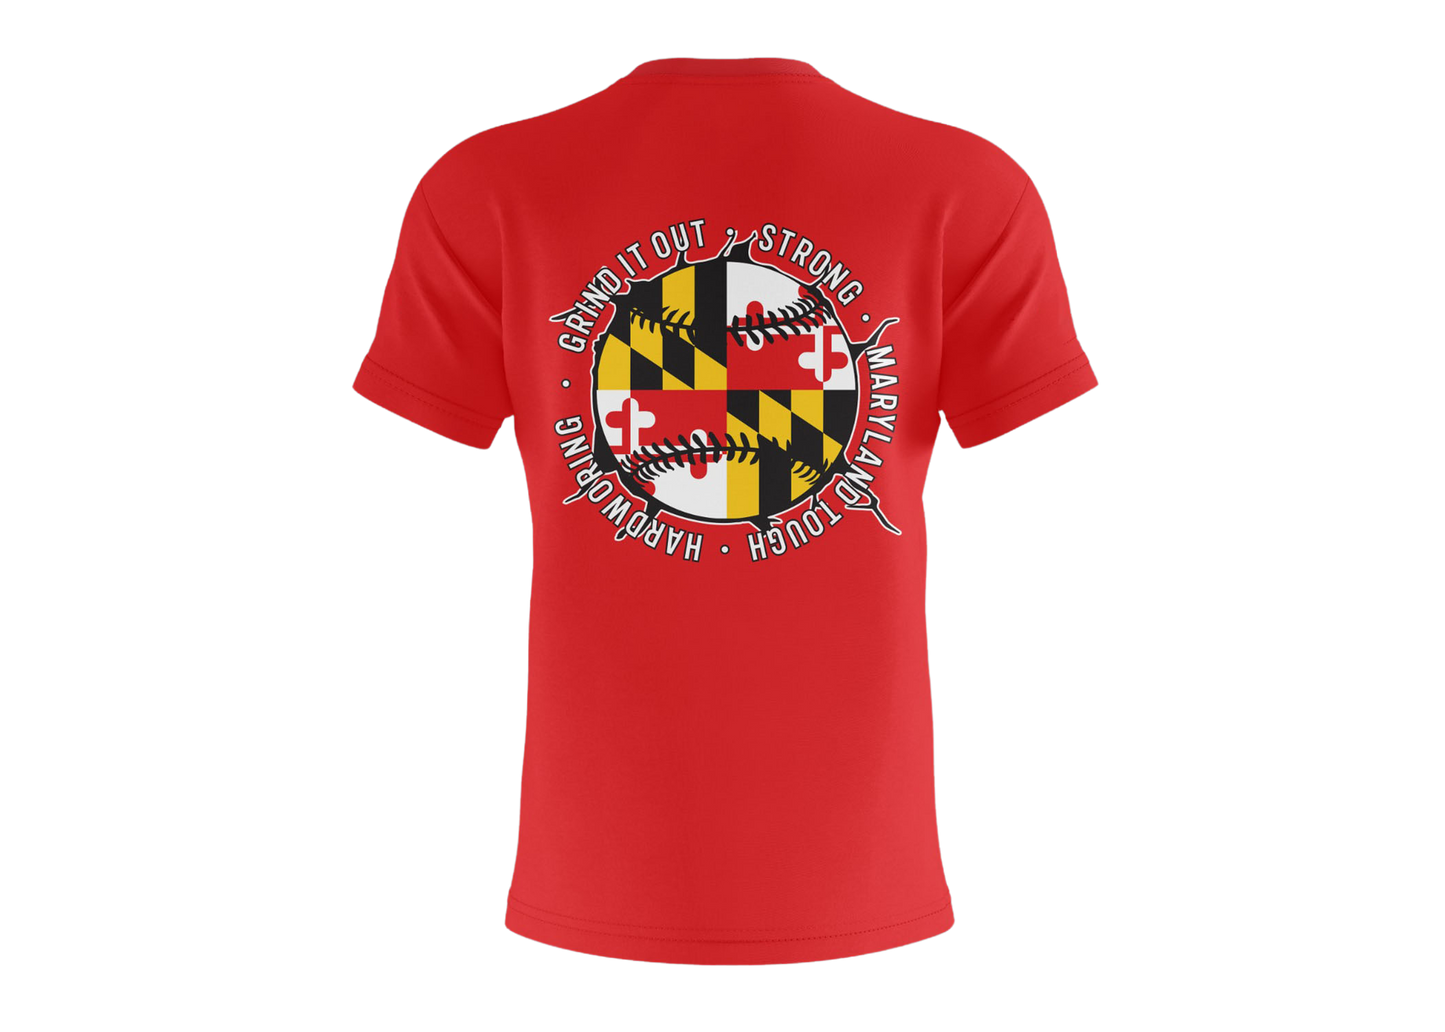 Maryland Integrity Old School Logo {Cotton T-Shirt}